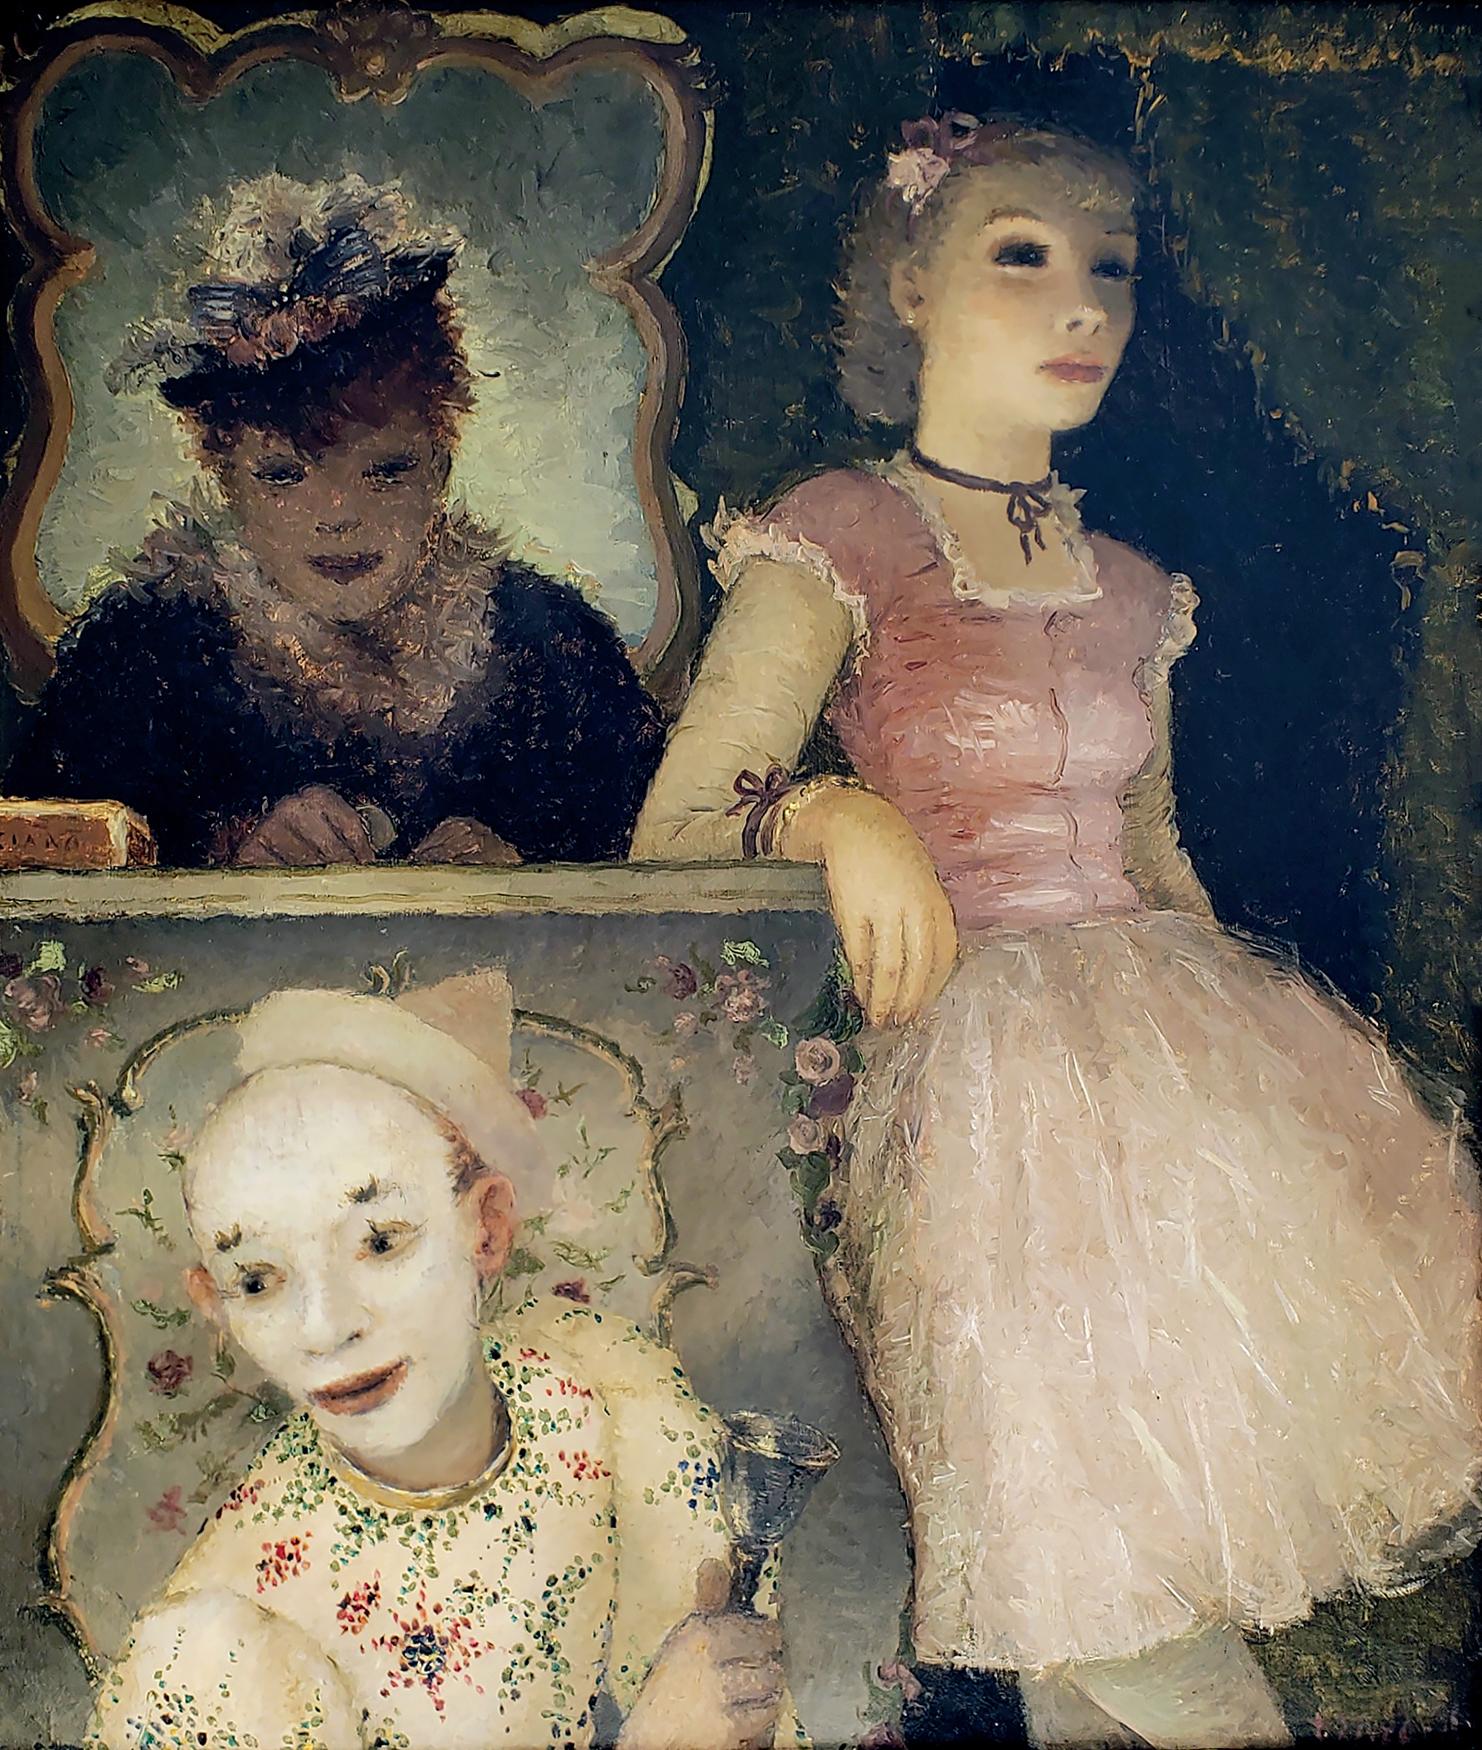 Dietz Edzard Portrait Painting - Ballerina, Clown and  Festival Performers - like Edgar Degas